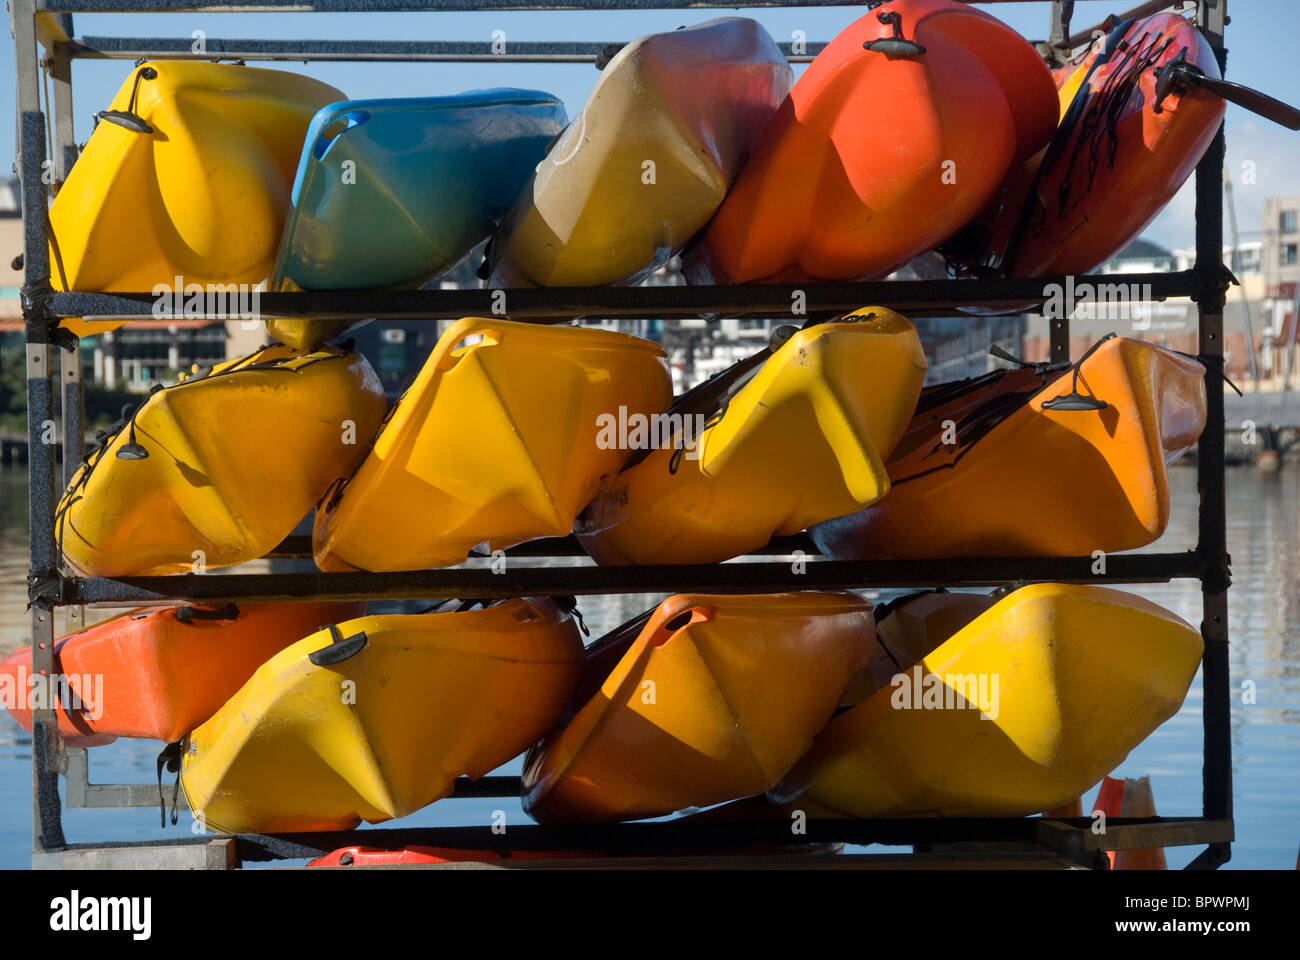 Orange and yellow kayaks stored in racks, Wellington, North Island, New Zealand Stock Photo